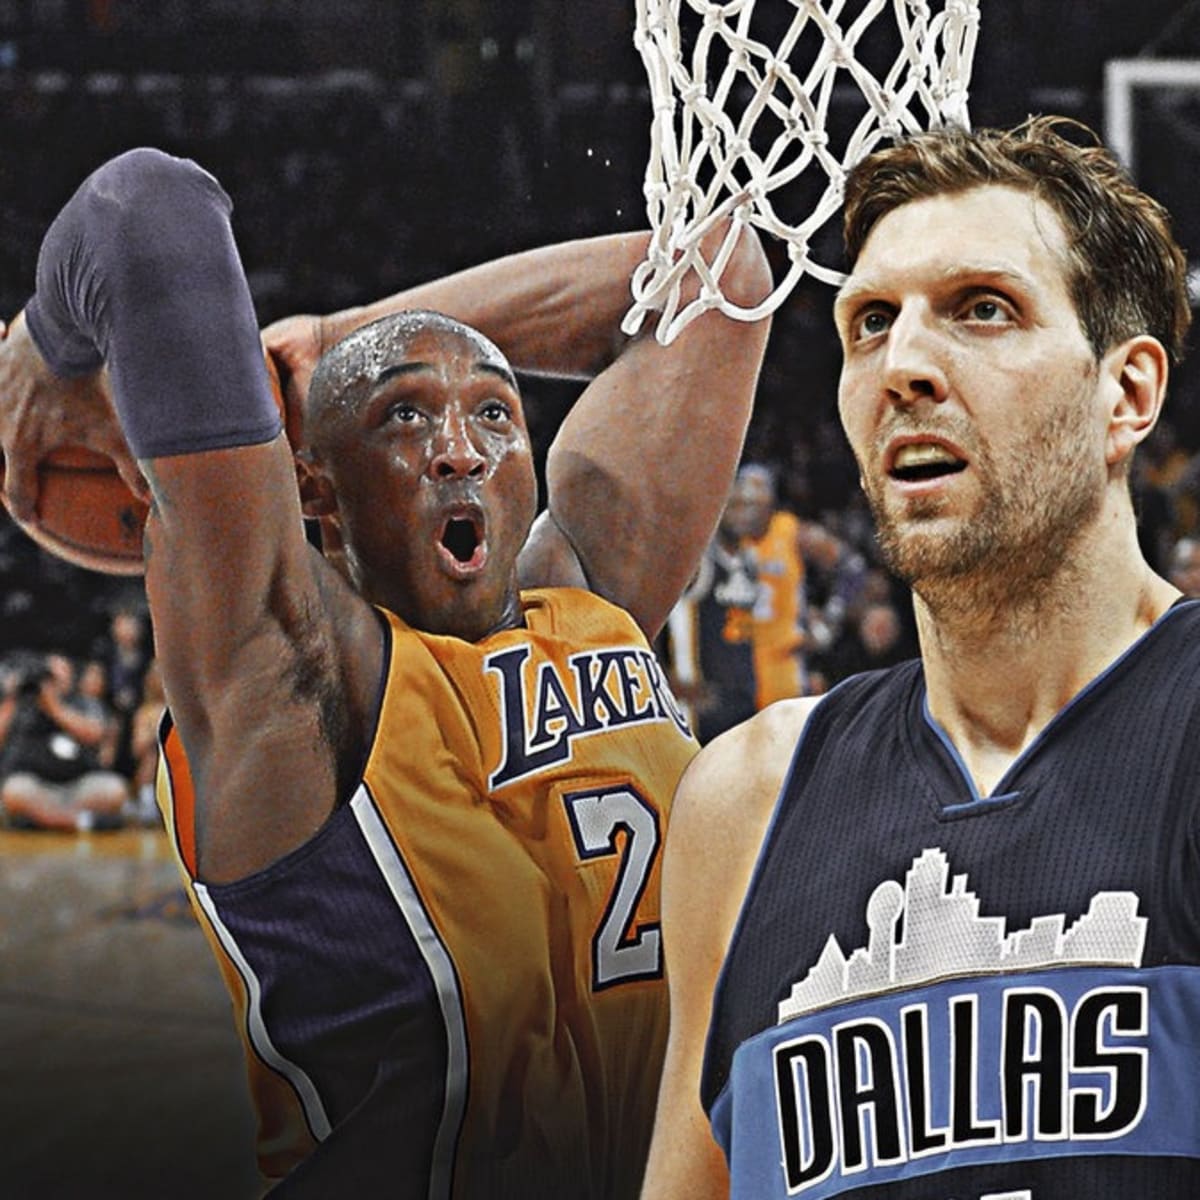 NO PLEASE': Dallas Mavericks react to news of death of Kobe Bryant